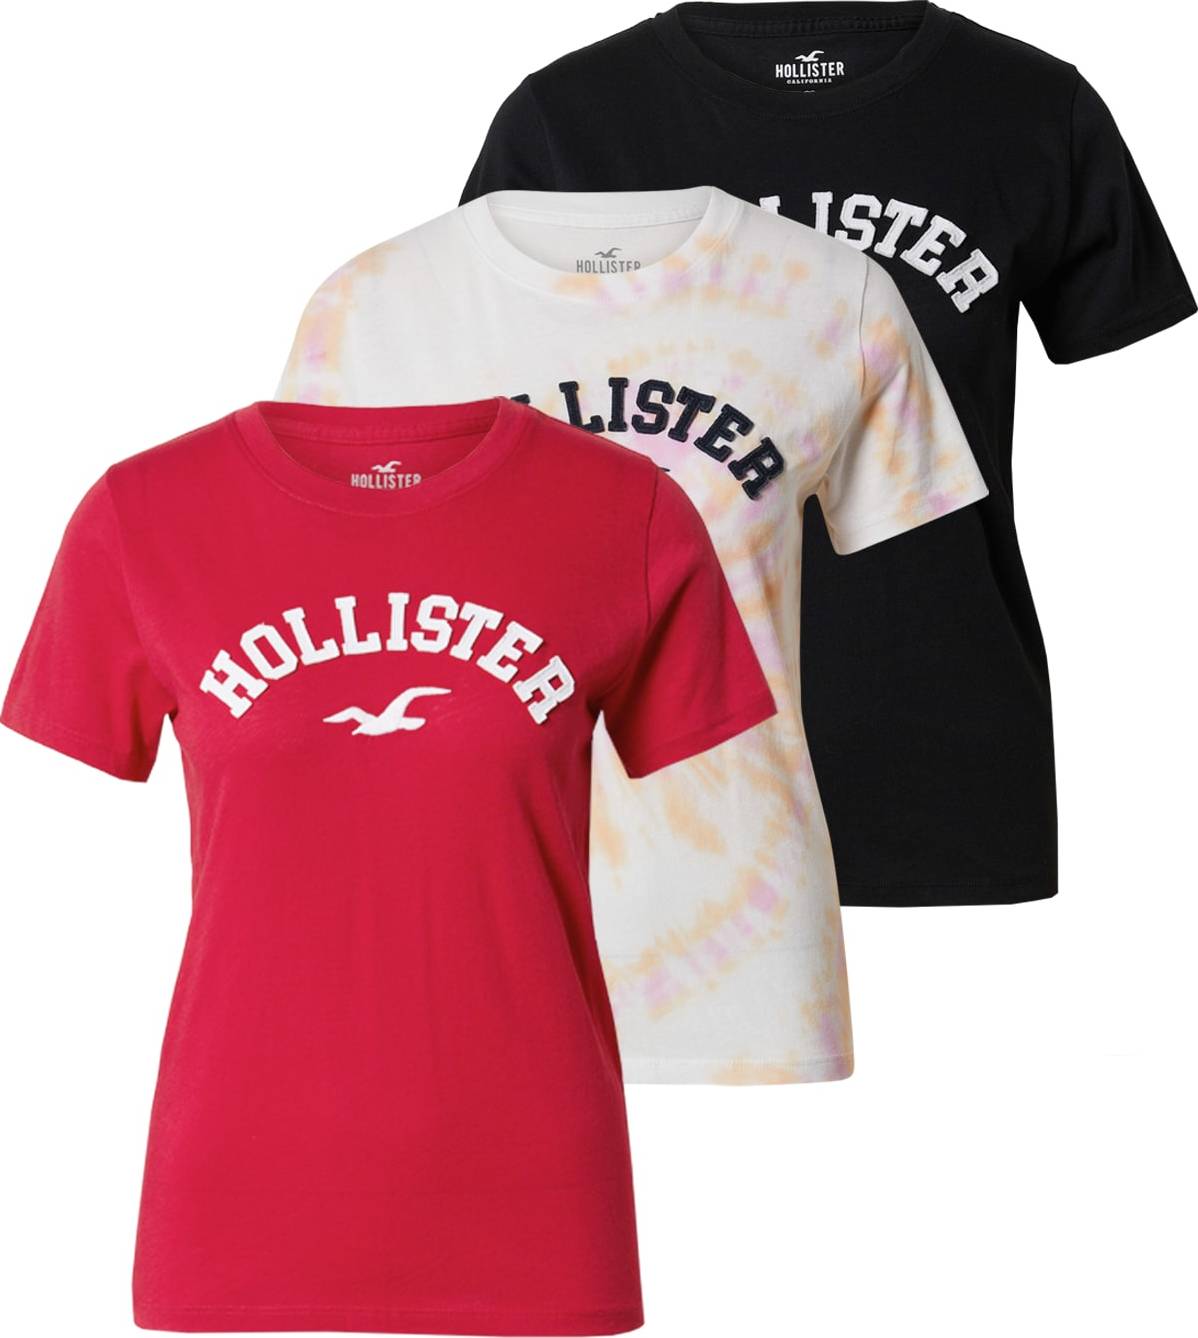 Tričko Hollister meruňková / červená / černá / bílá